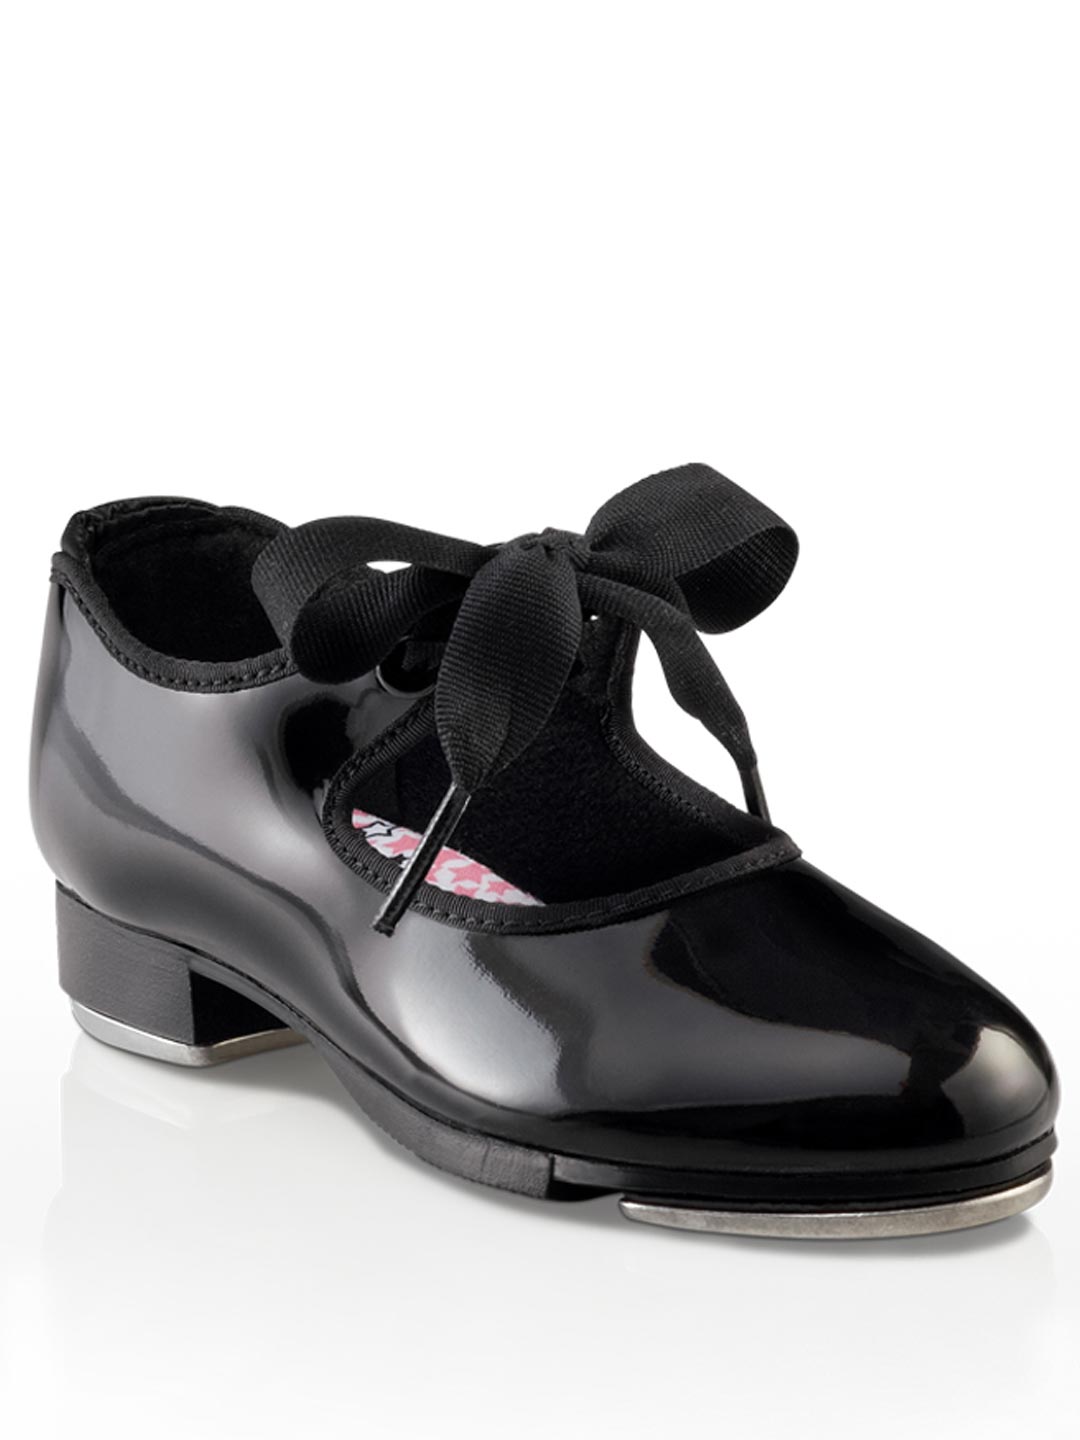 Jr. Tyette Kid's Tap Dance Shoe - Black Patent